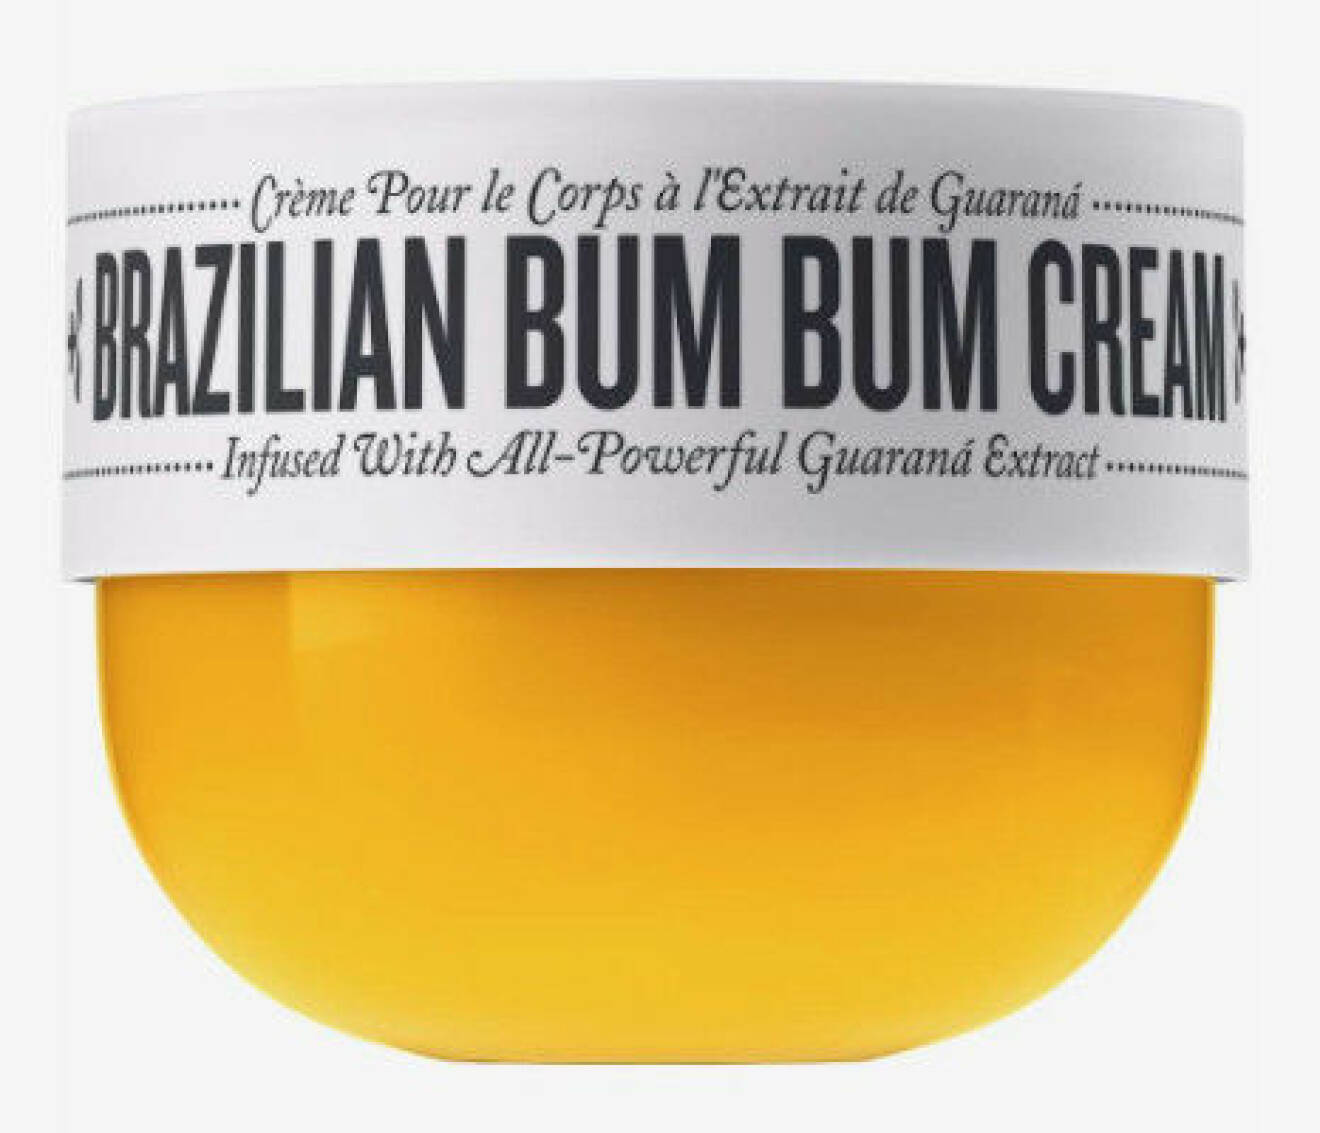 Brazilian Bum Bum crème